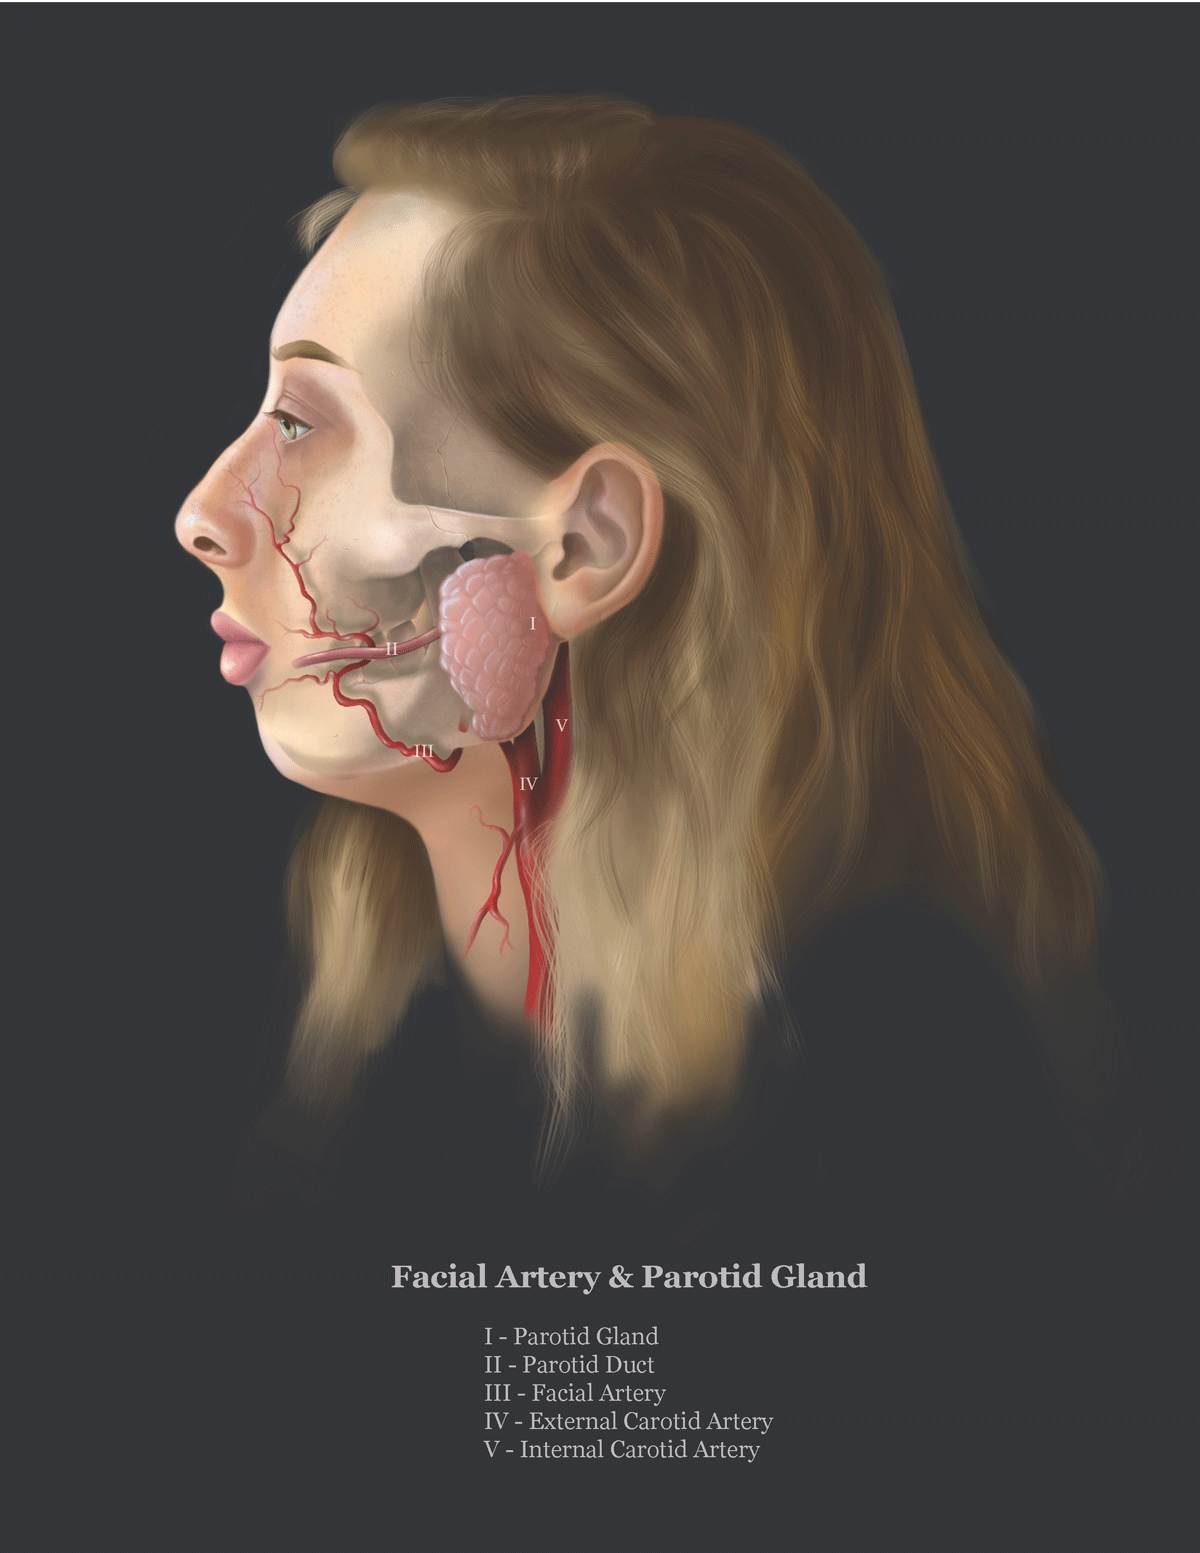 Scientific Illustration by Julia Lunavictoria of a self portrait depicting internal face anatomy with arteries